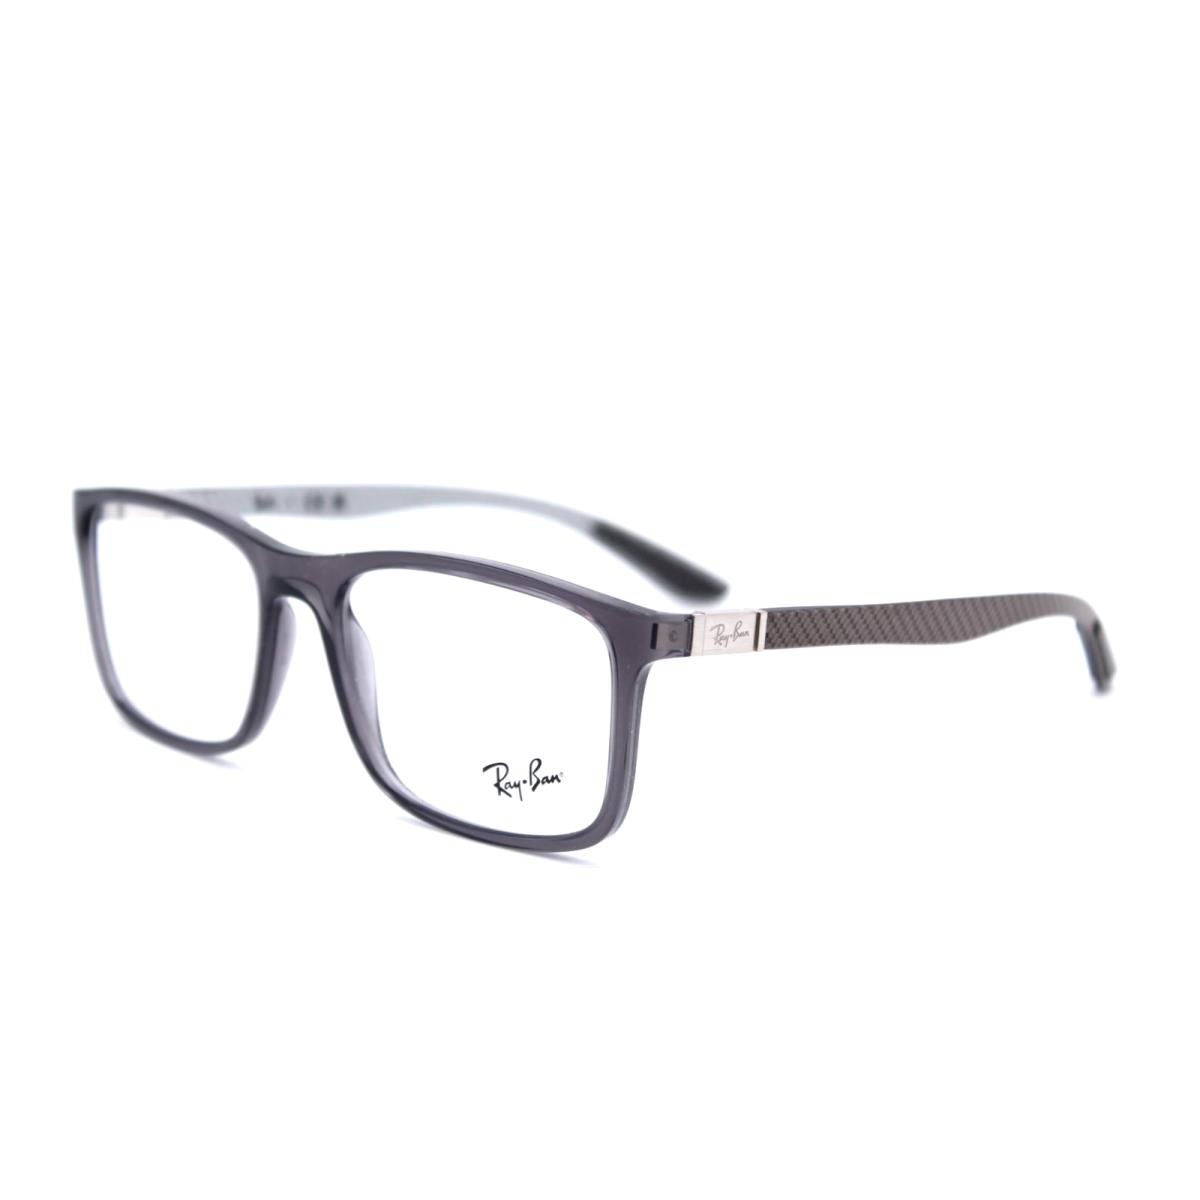 Ray-ban Eyeglasses Tech Series RB 8908 8061 55-18 Grey Frames W/carbon Fiber - Frame: Transparent Grey & Carbon Fiber, Lens: